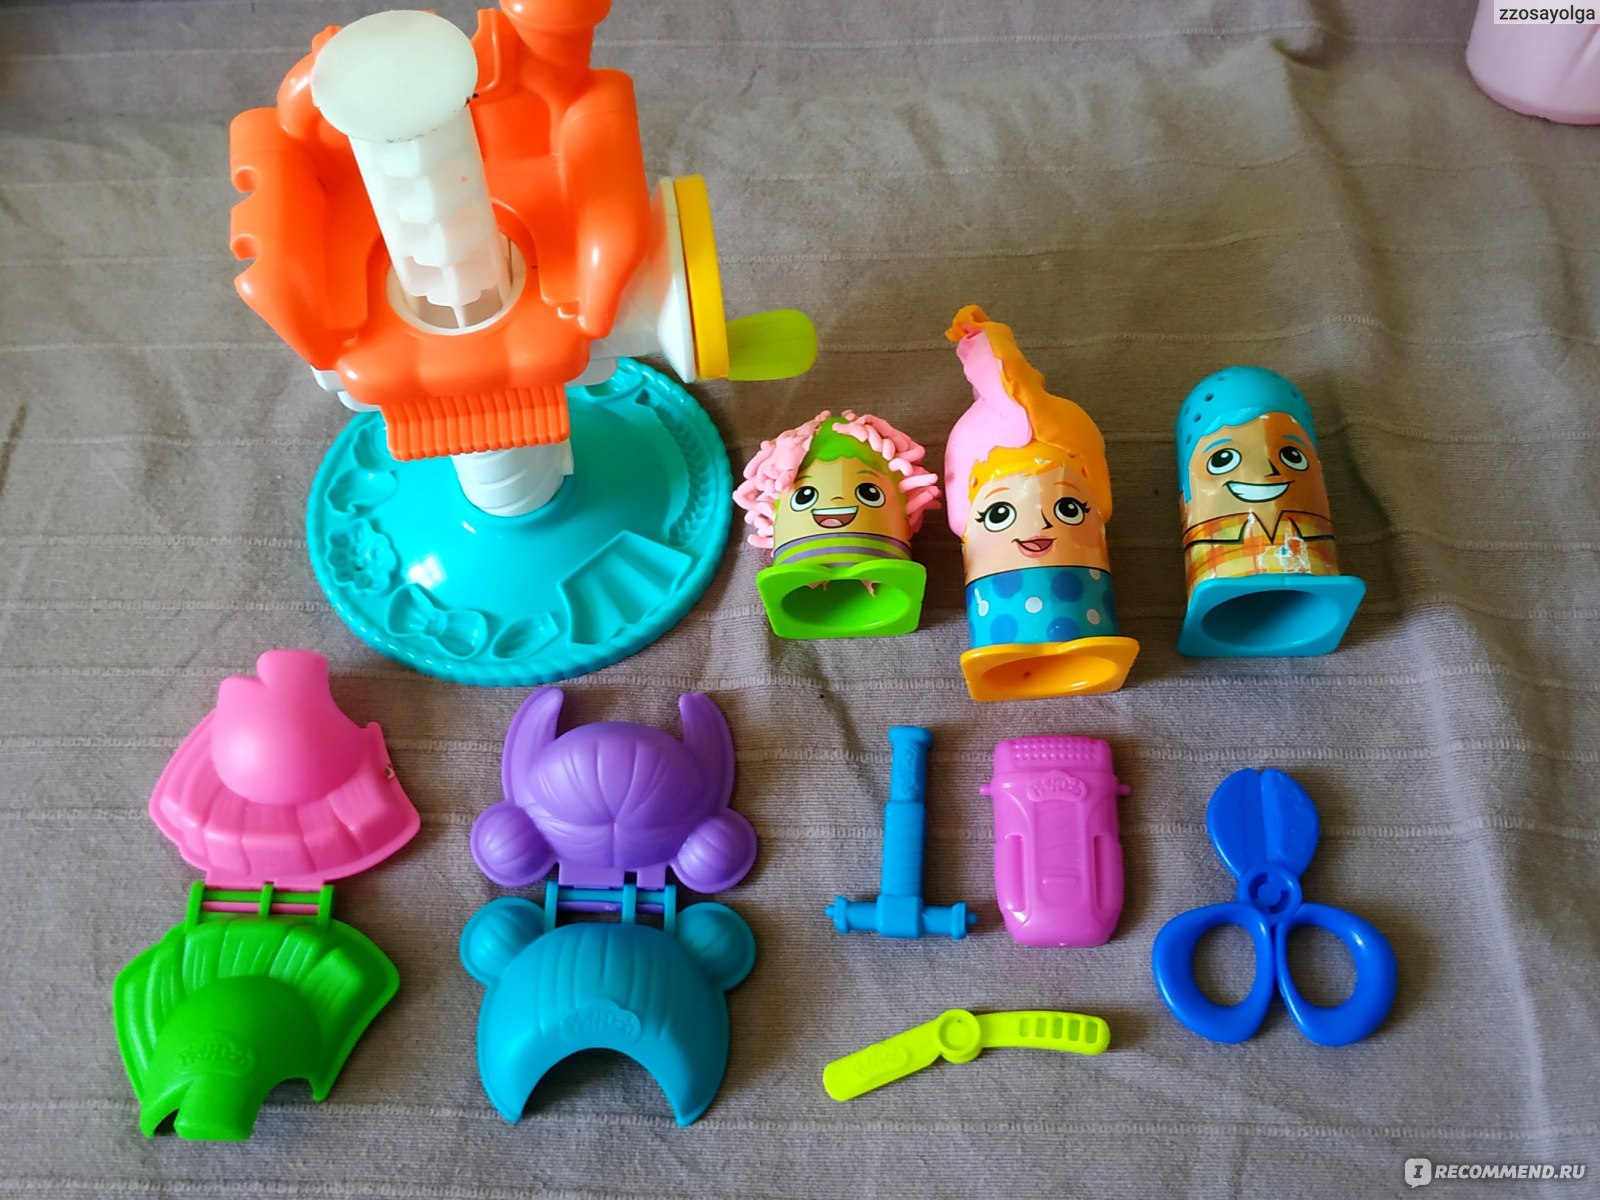 Набор для творчества Hasbro Play-Doh «Сумасшедшие прически» FL0